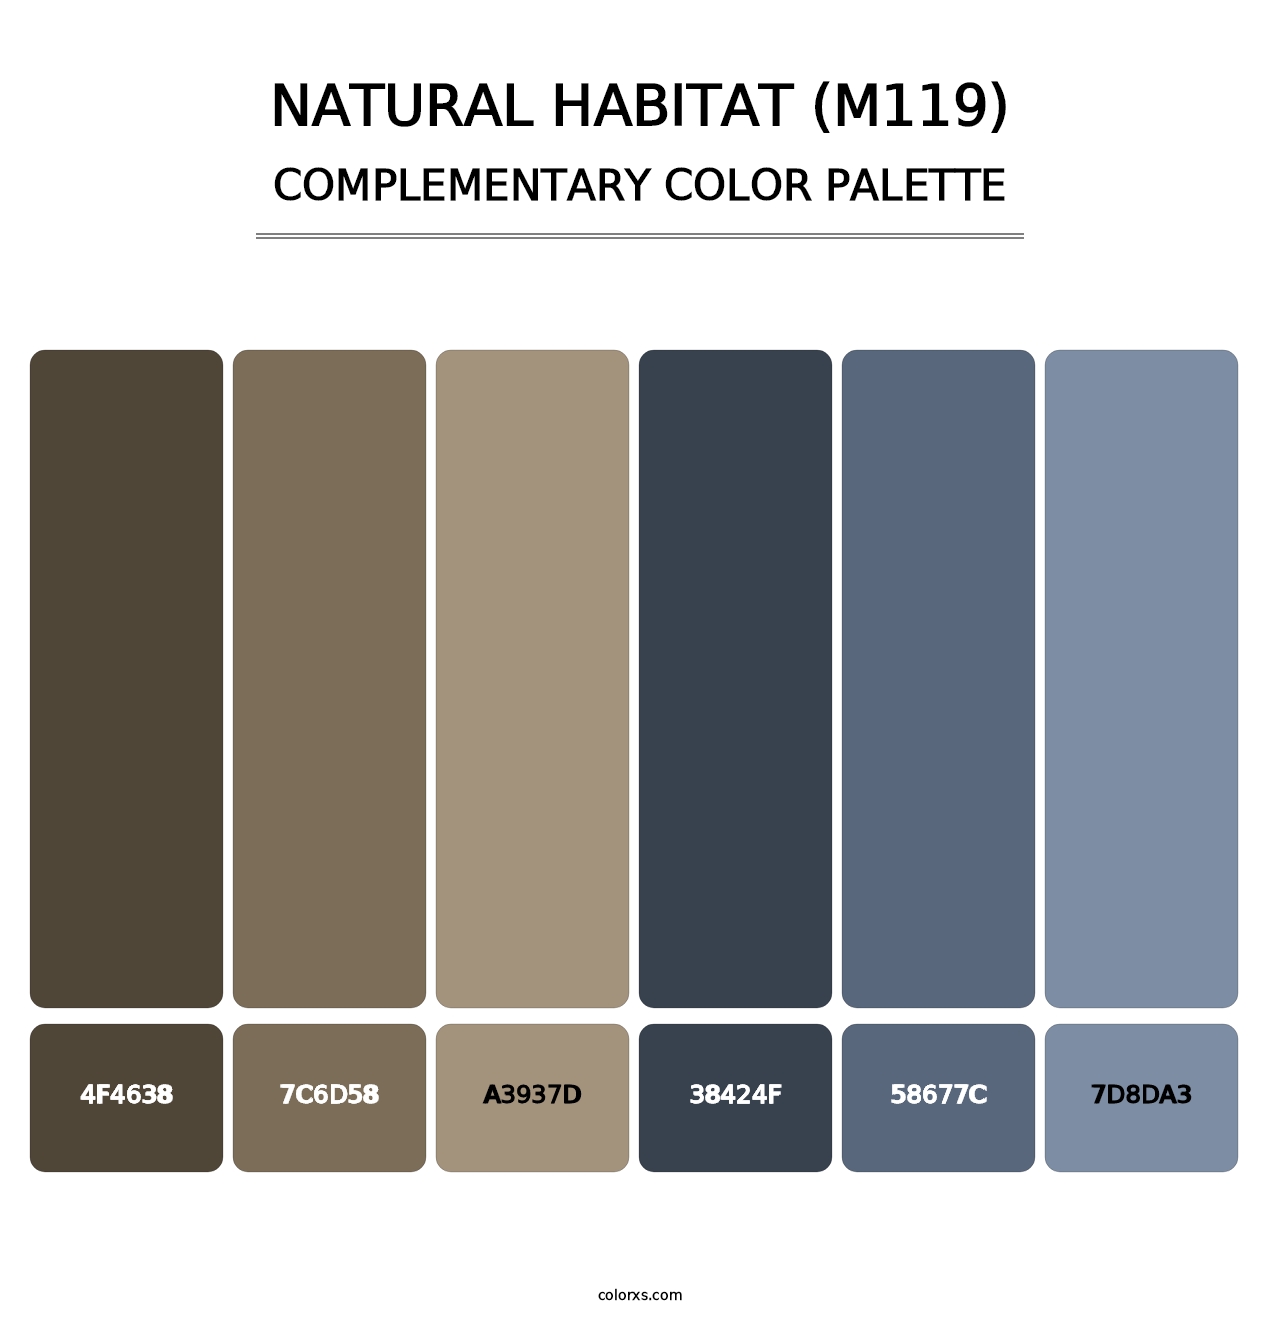 Natural Habitat (M119) - Complementary Color Palette